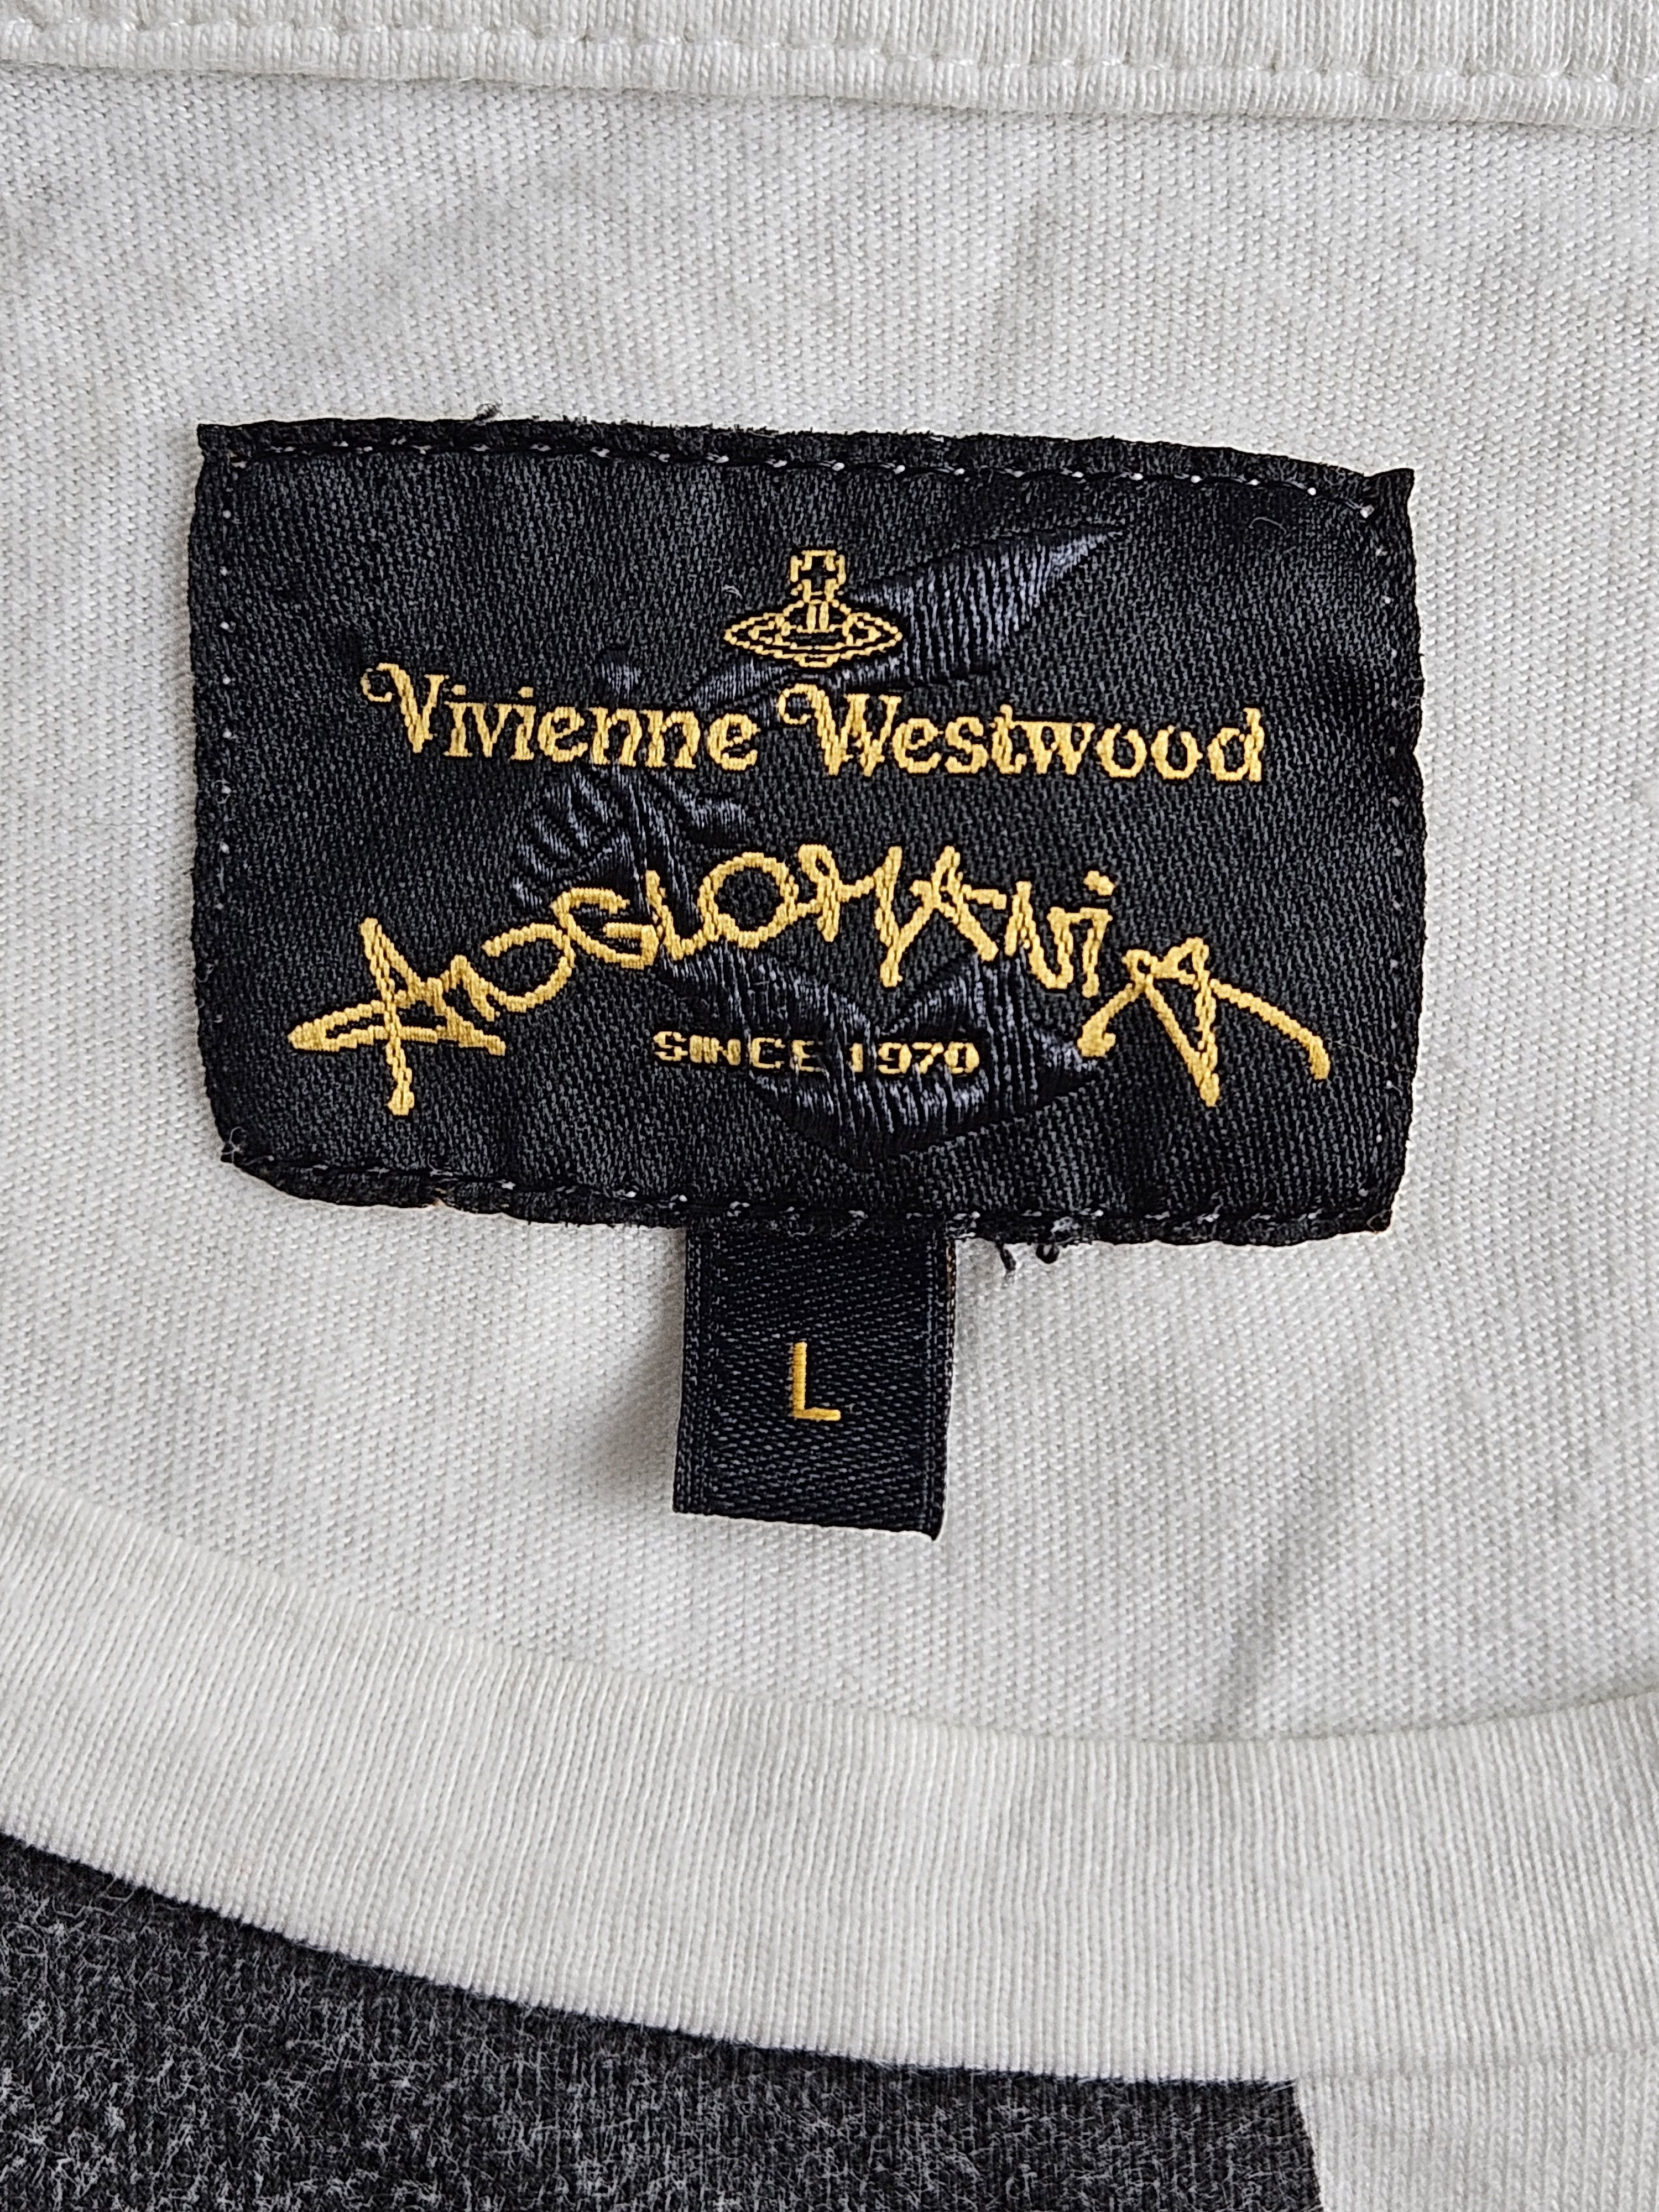 Vivienne Westwood Anglomania Orb Shirt - 4